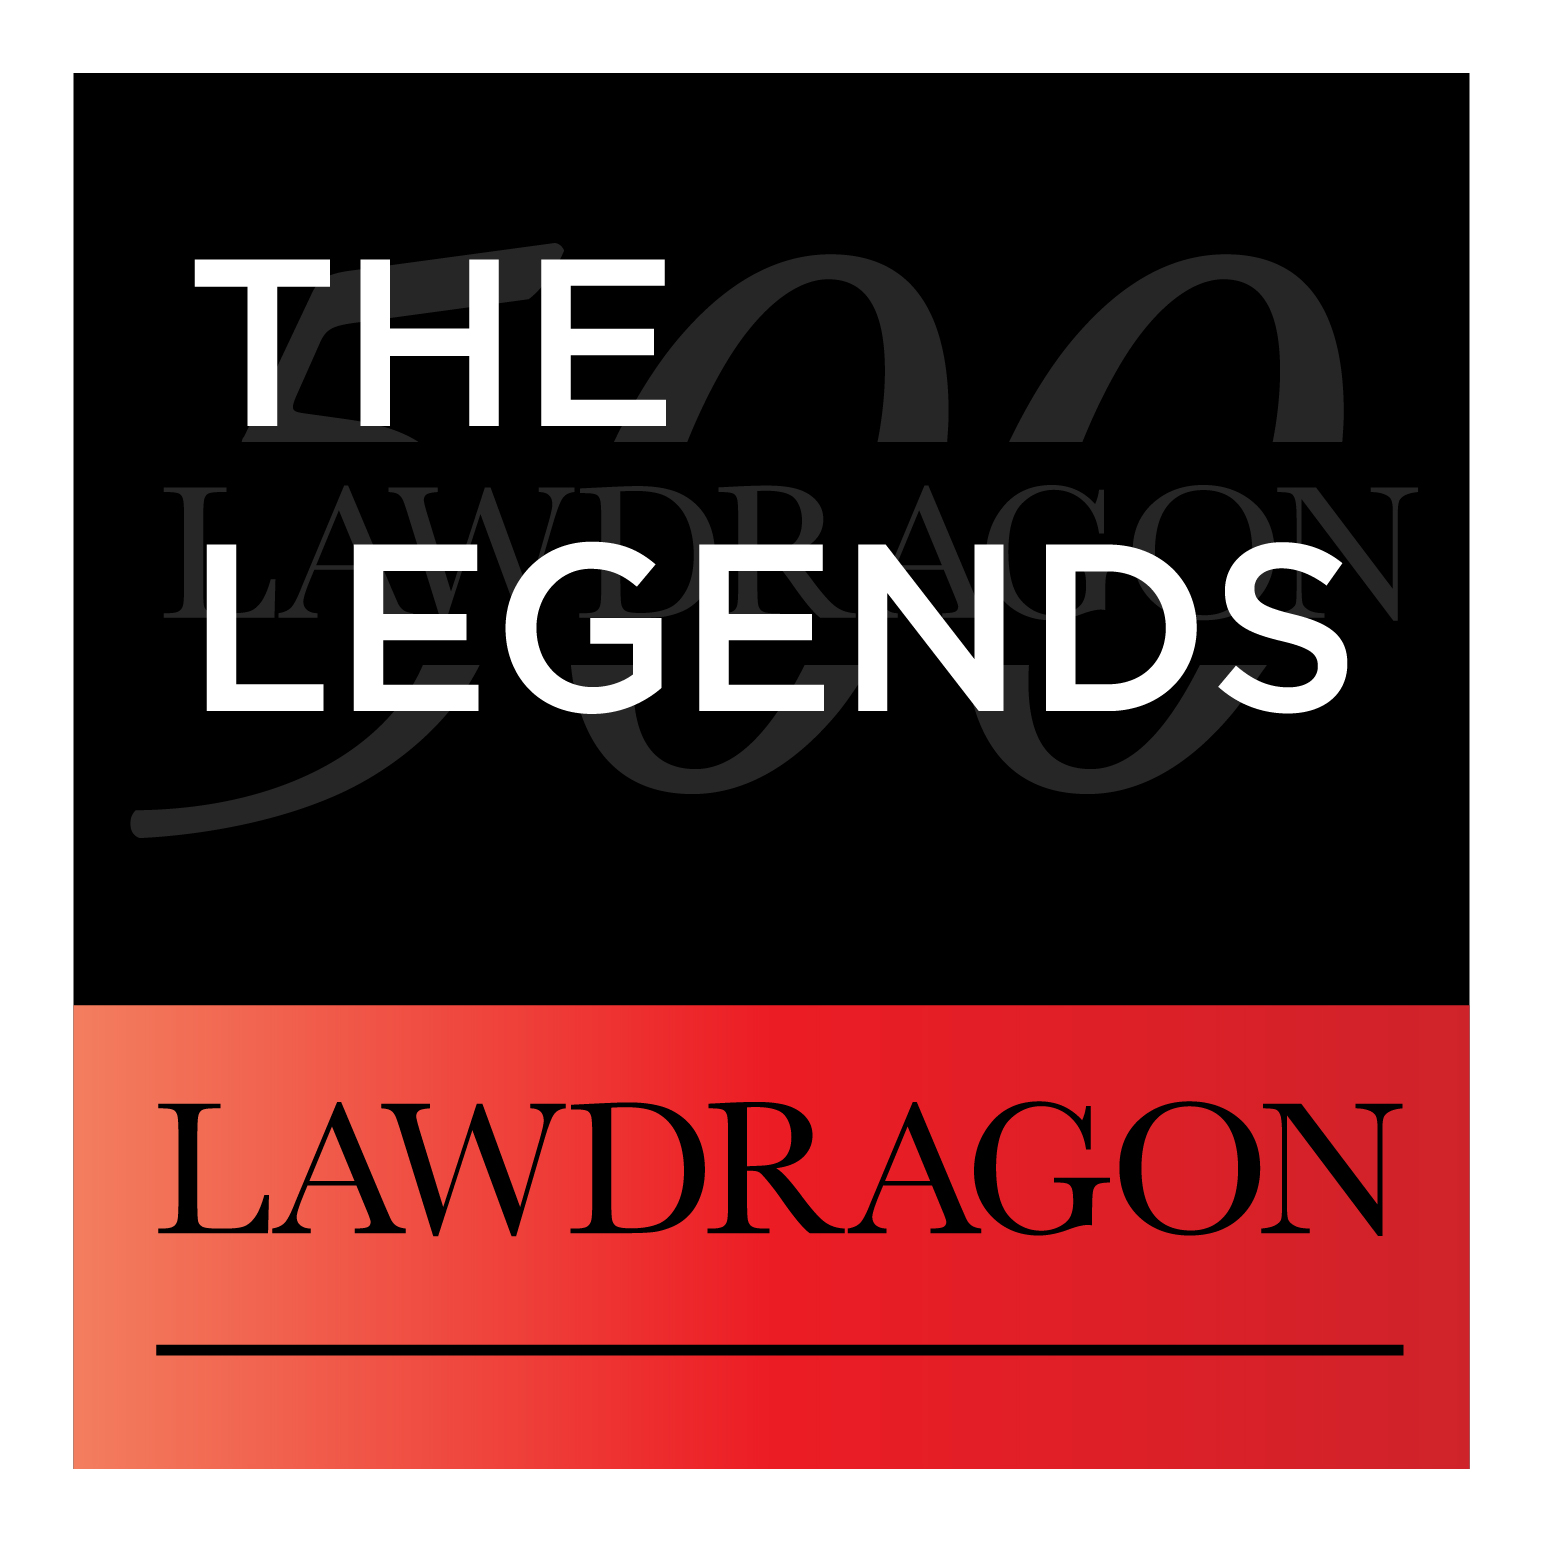 The Legends Lawdragon 500